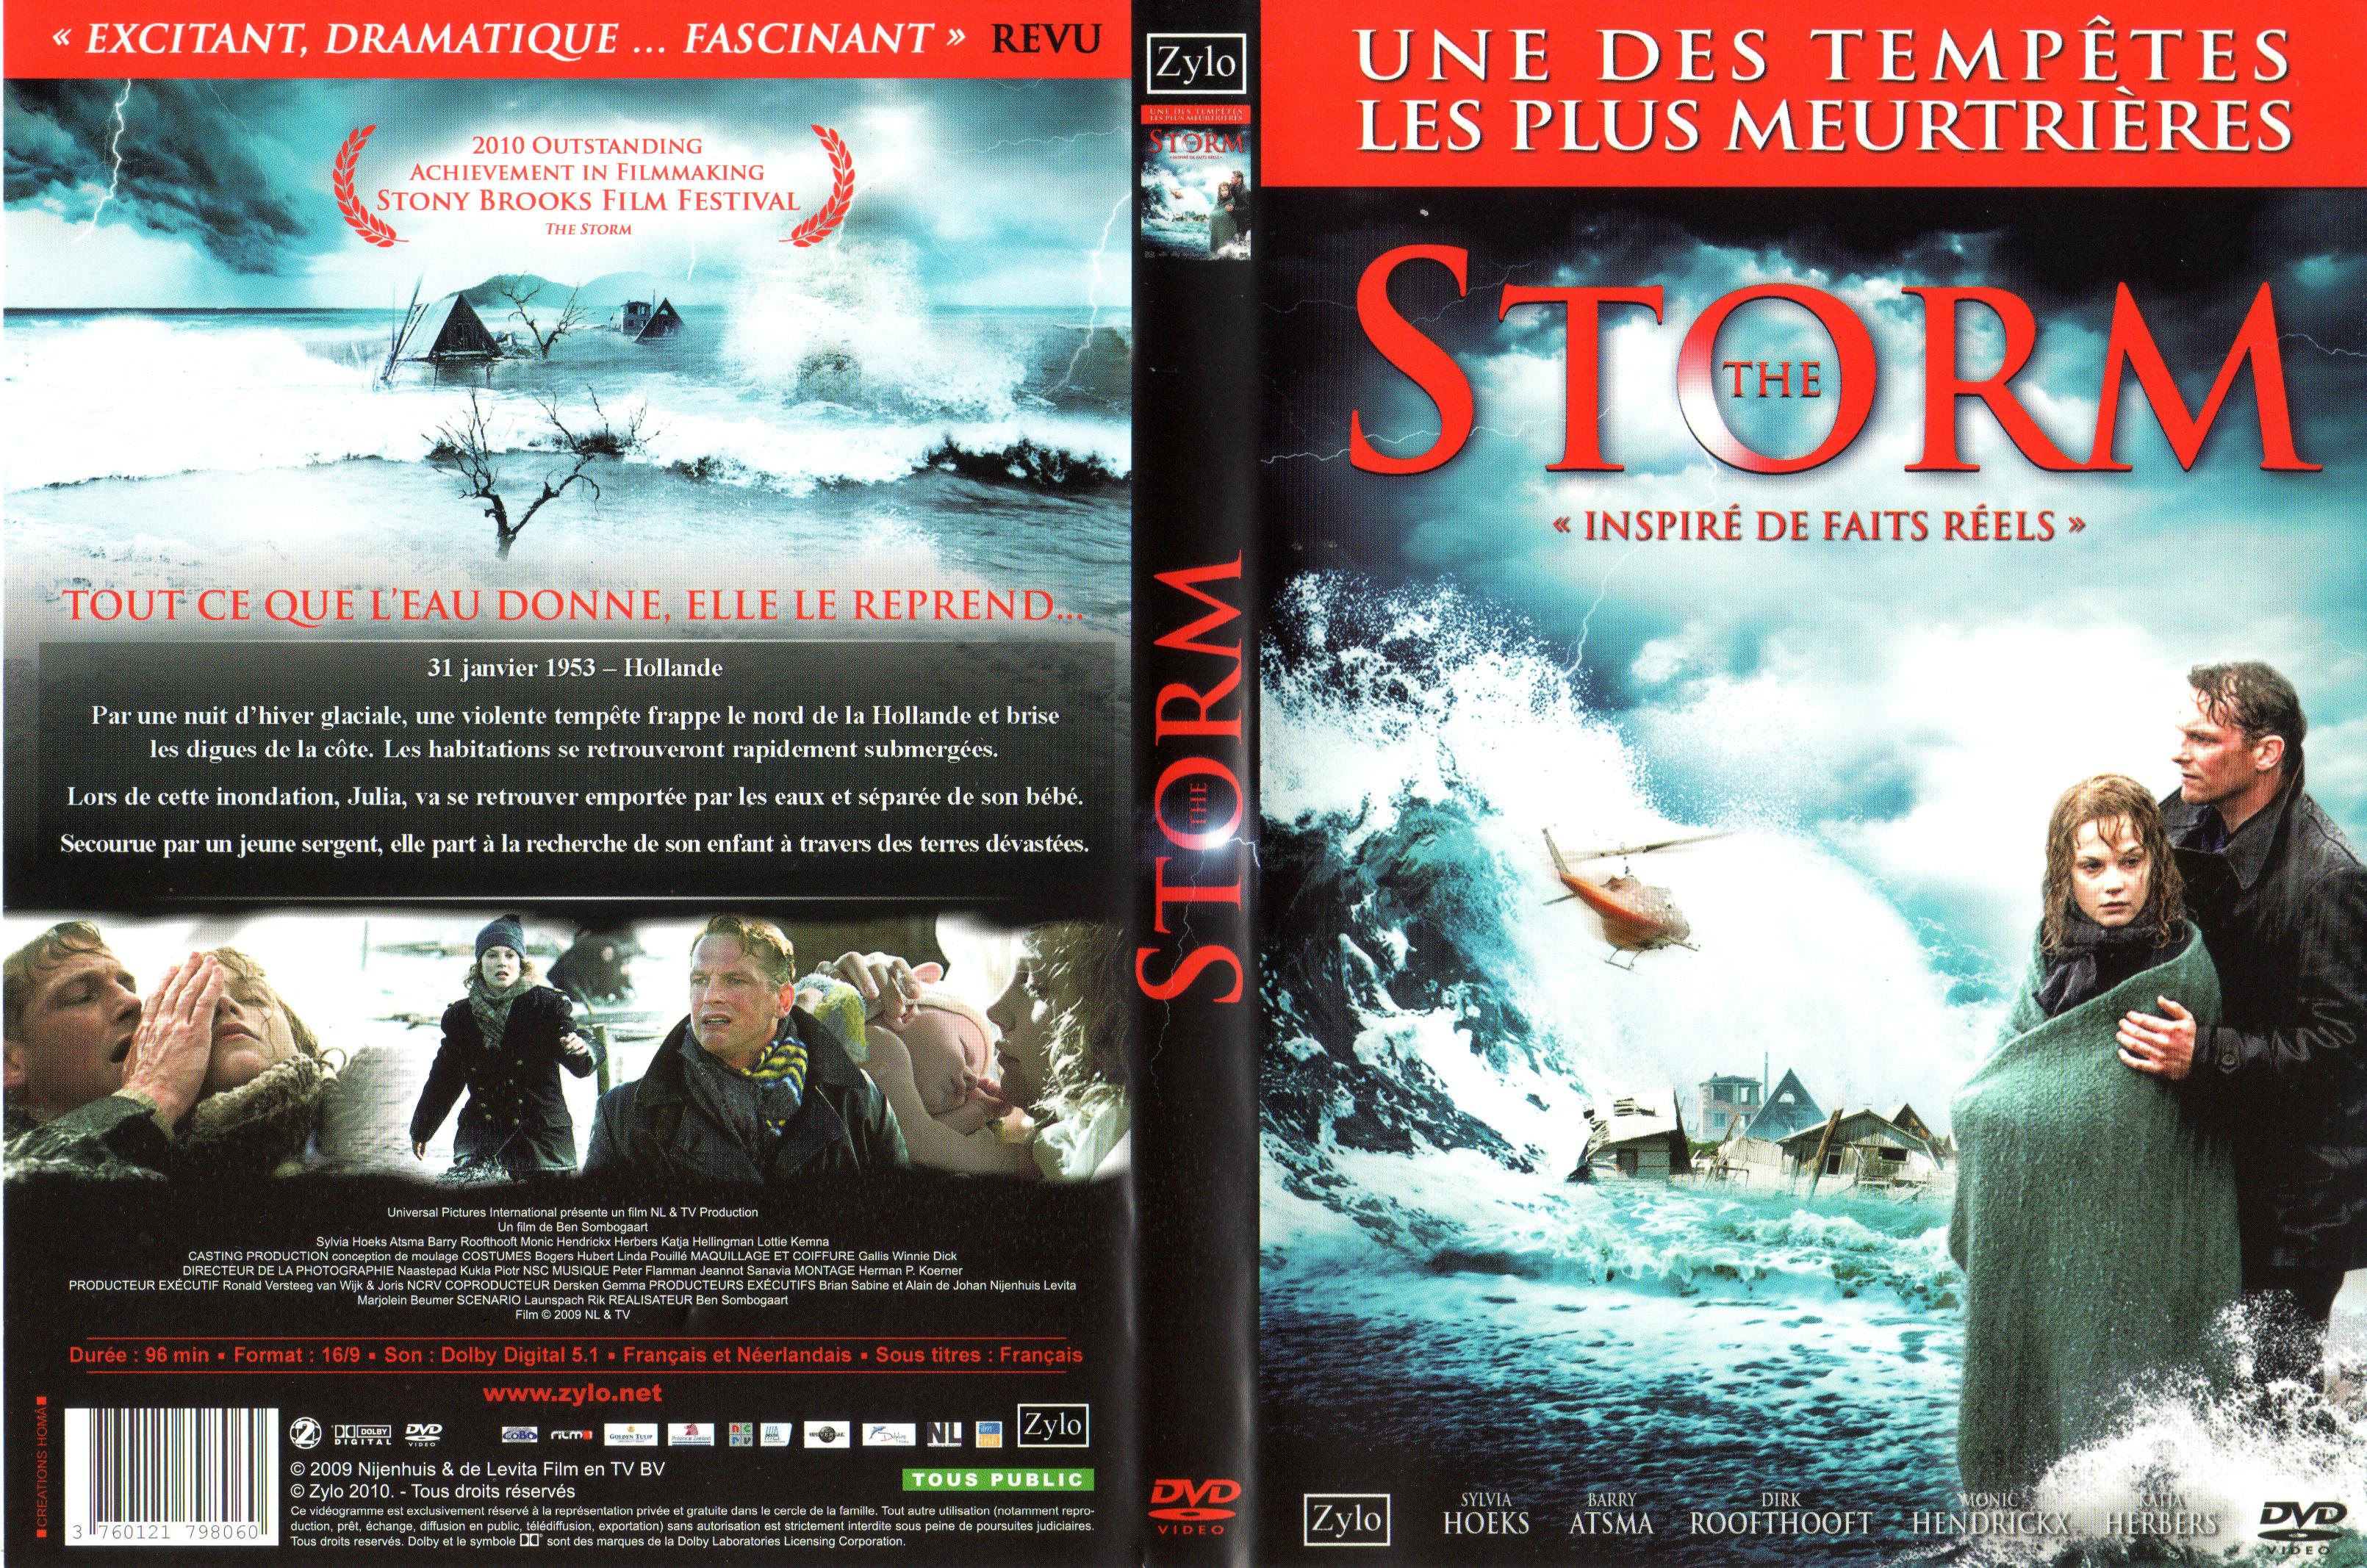 Jaquette DVD The Storm